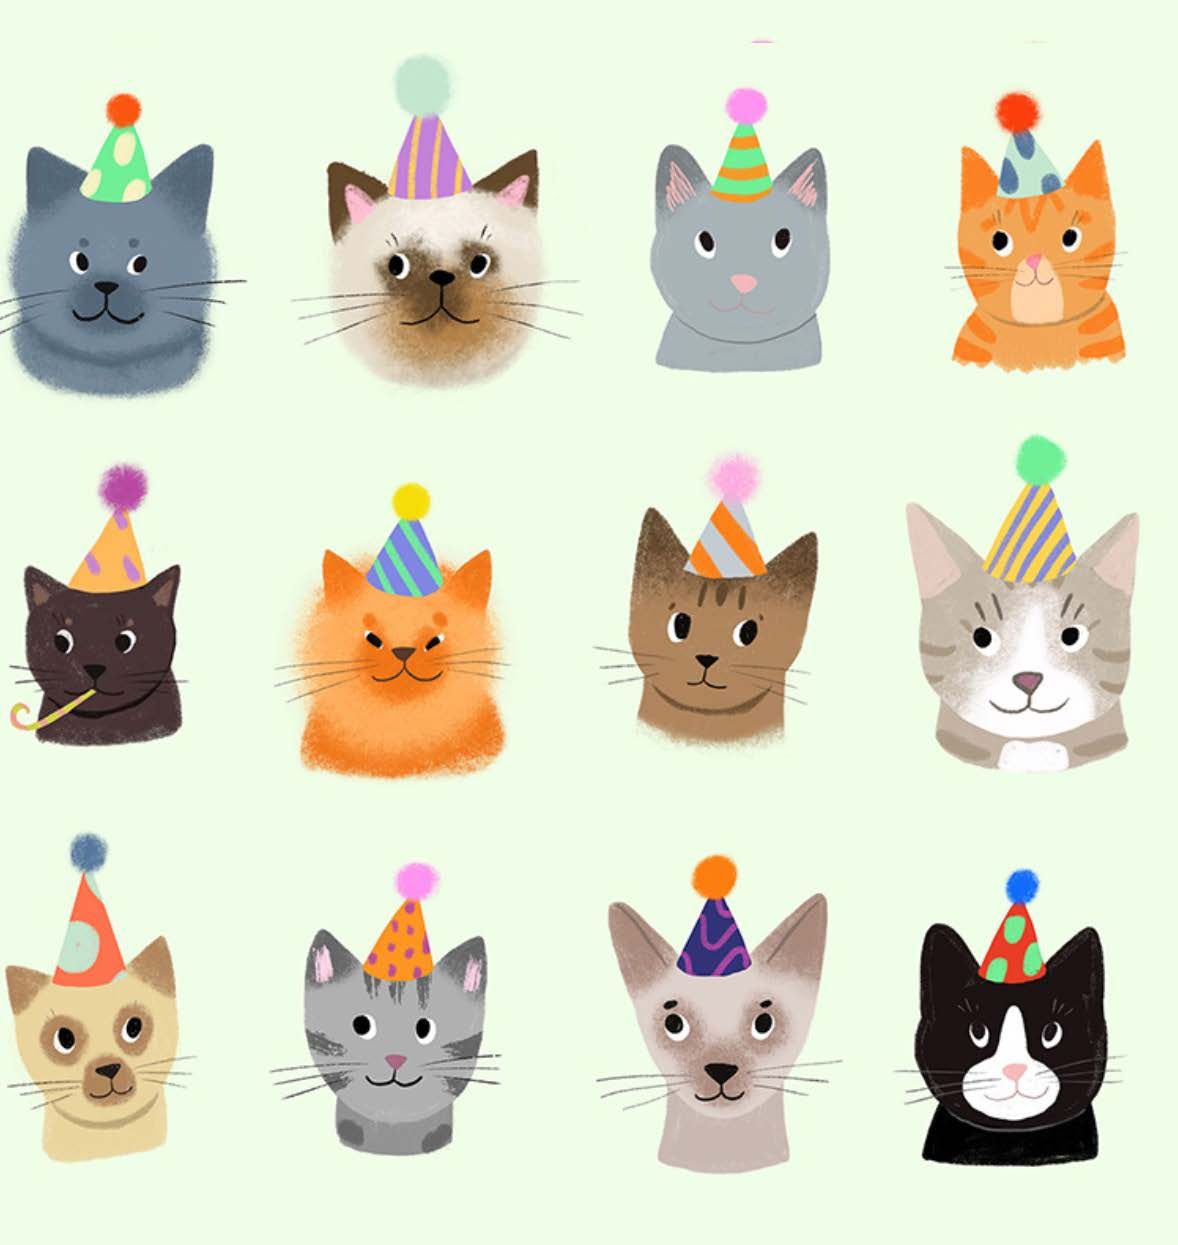 NUOVO - "BIRTHDAY CATS" GREETING CARD